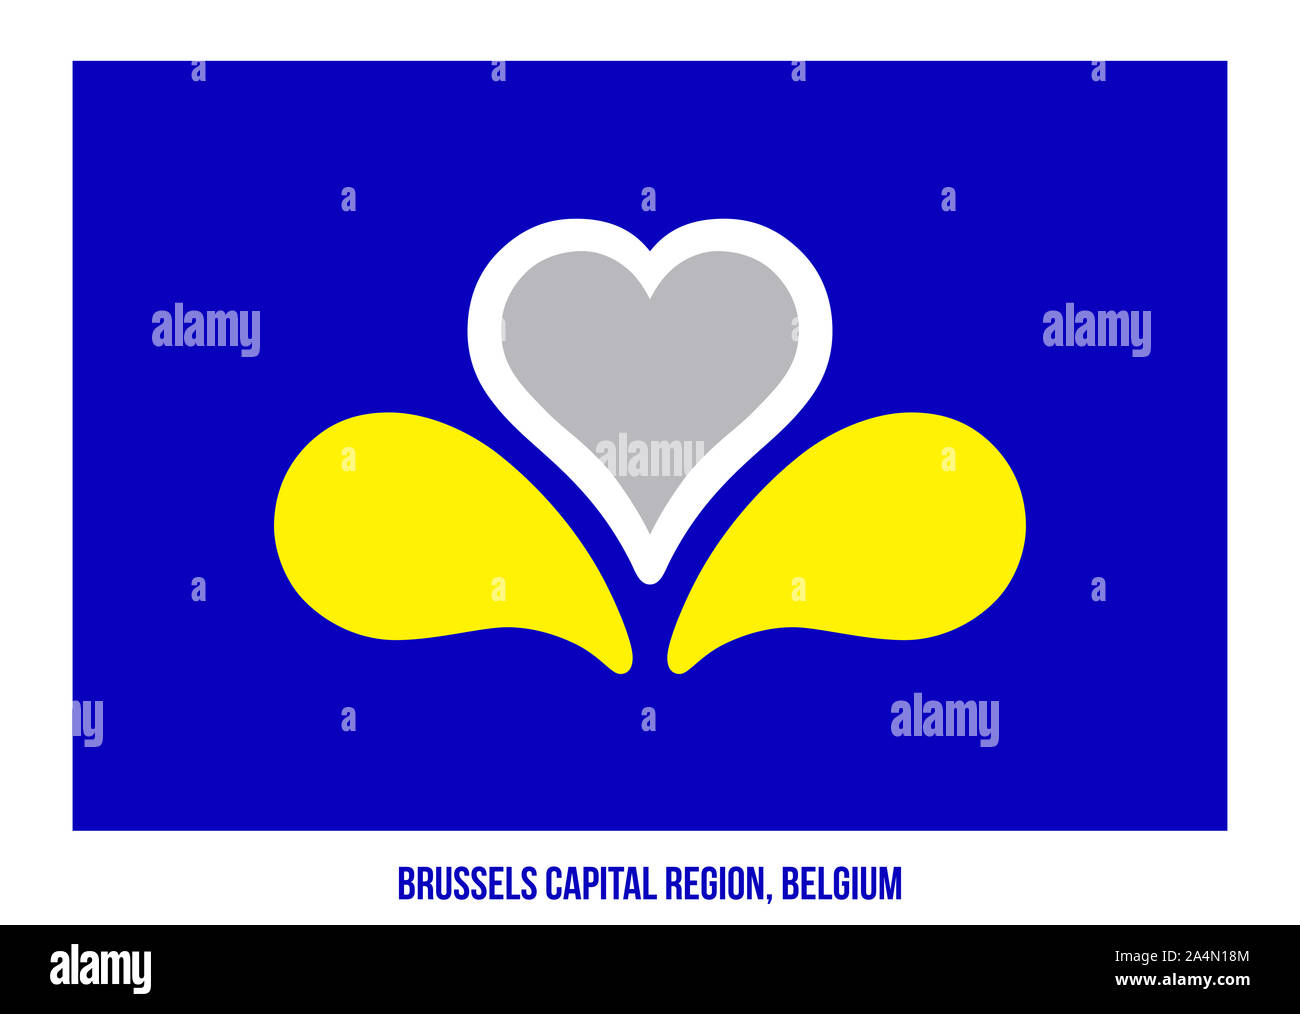 Brussels Capital Region, Belgium Flag Vector Illustration on White Background. Region Flag of Belgium. Correct Size, Proportion, Colors. Stock Photo